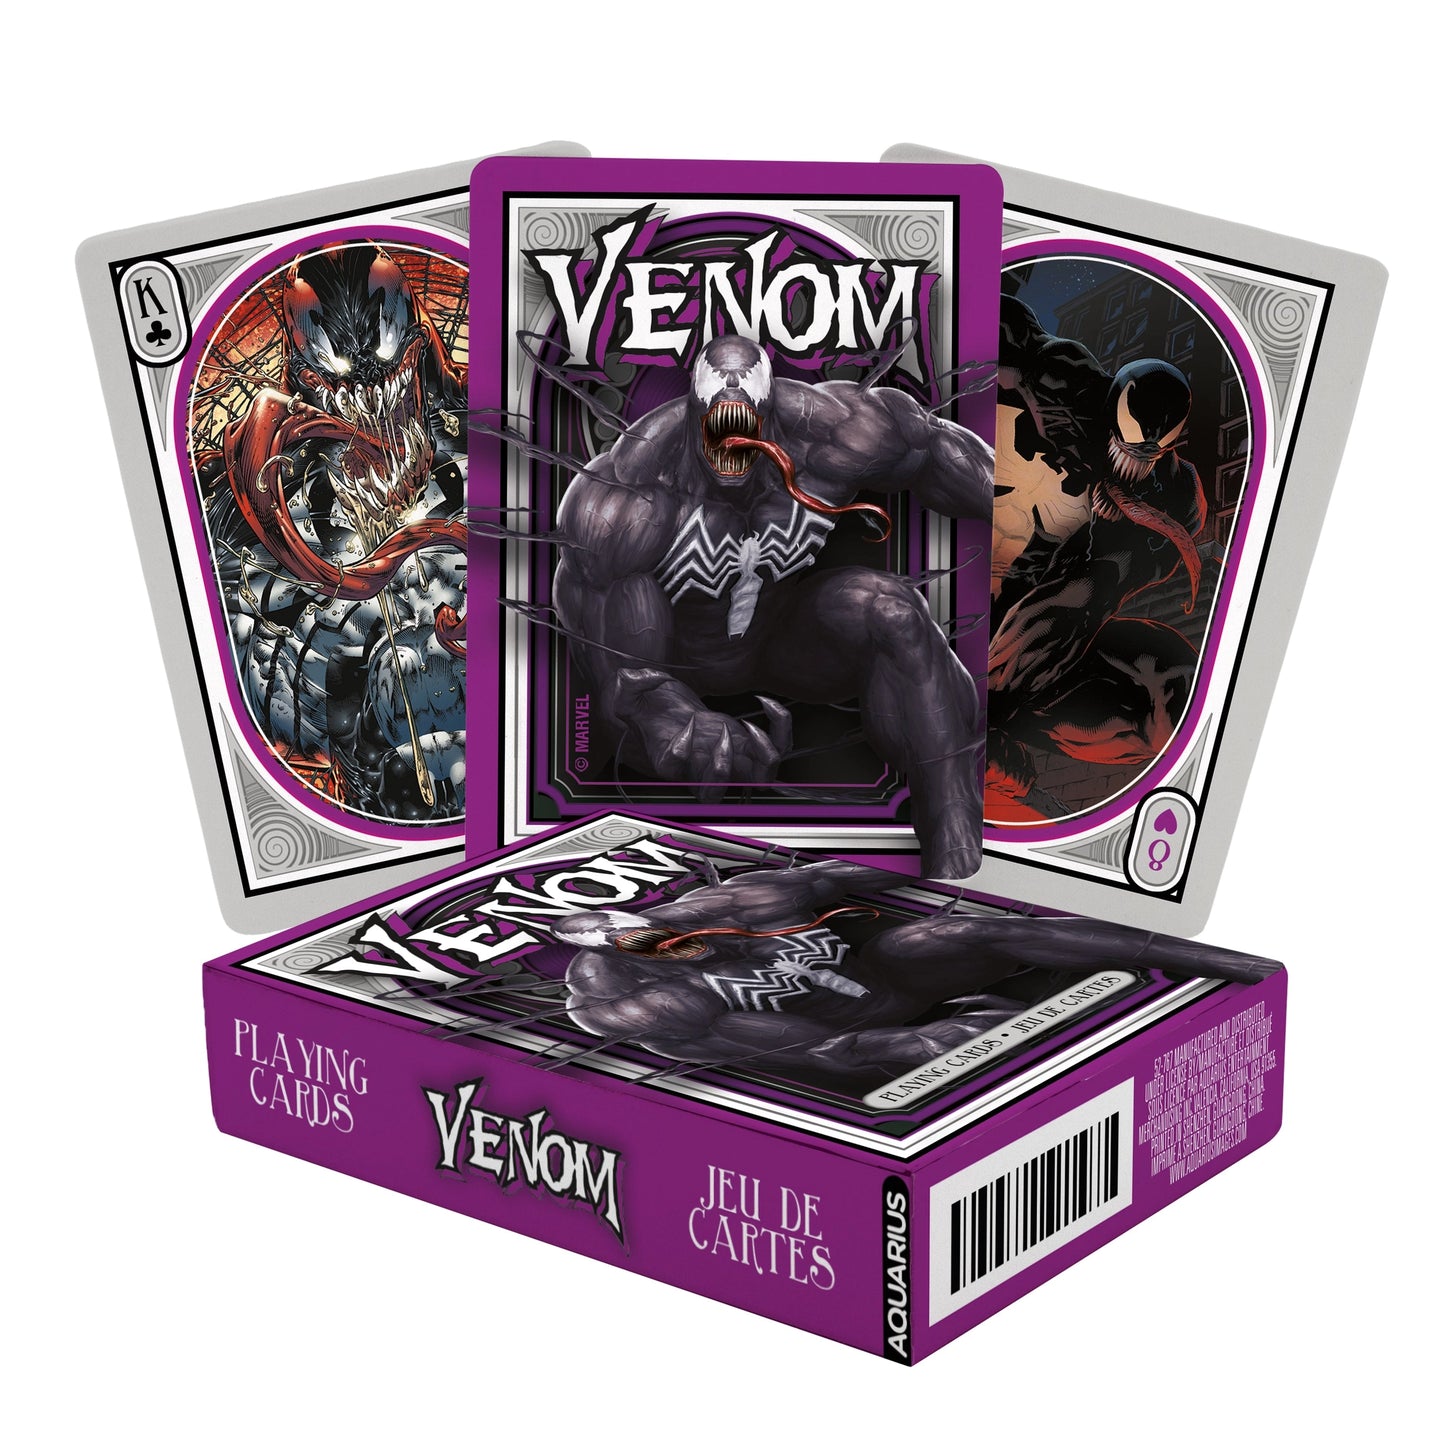 Marvel Venom Playing Cards – We are Venom!